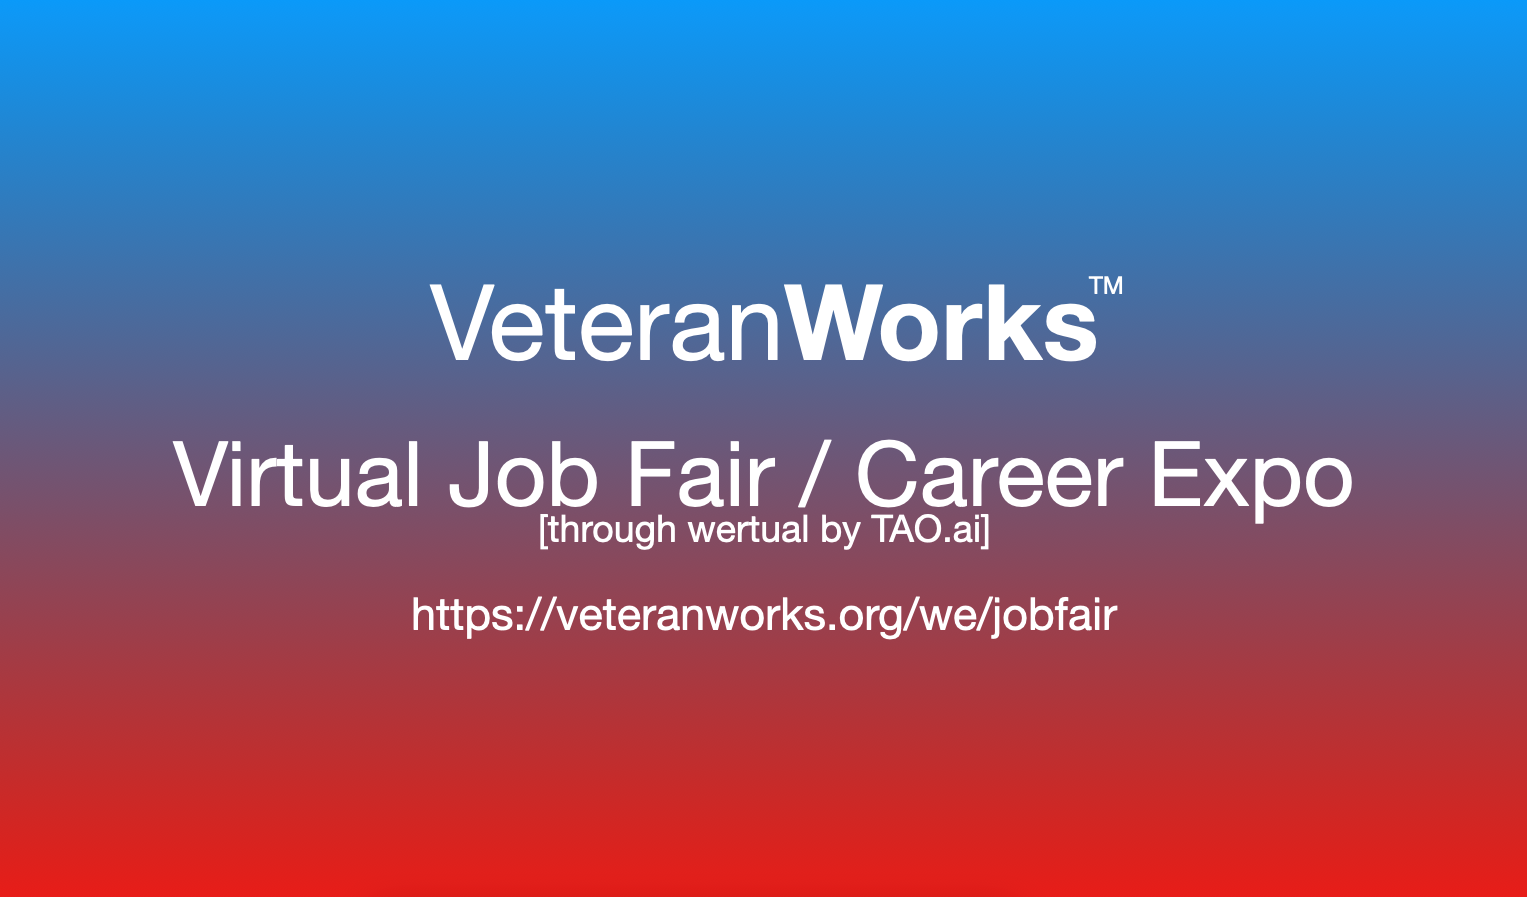 #VeteranWorks Virtual Job Fair / Career Expo #Veterans Event #Las Vegas